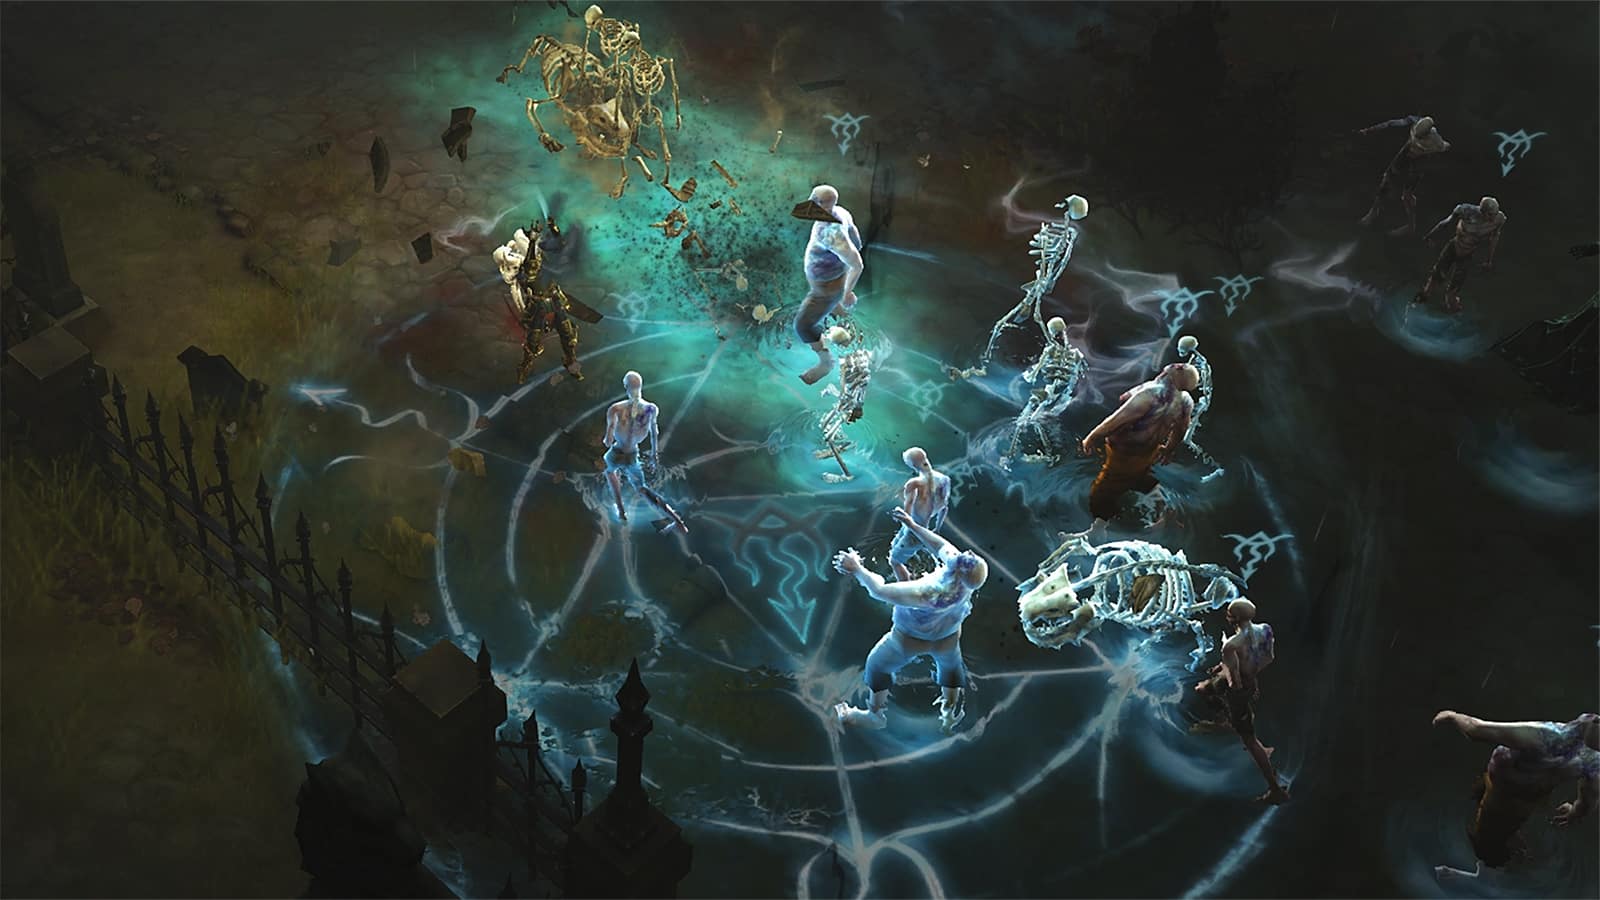 A screenshot showing gameplay of Diablo 3's Necromancer using Decrepify